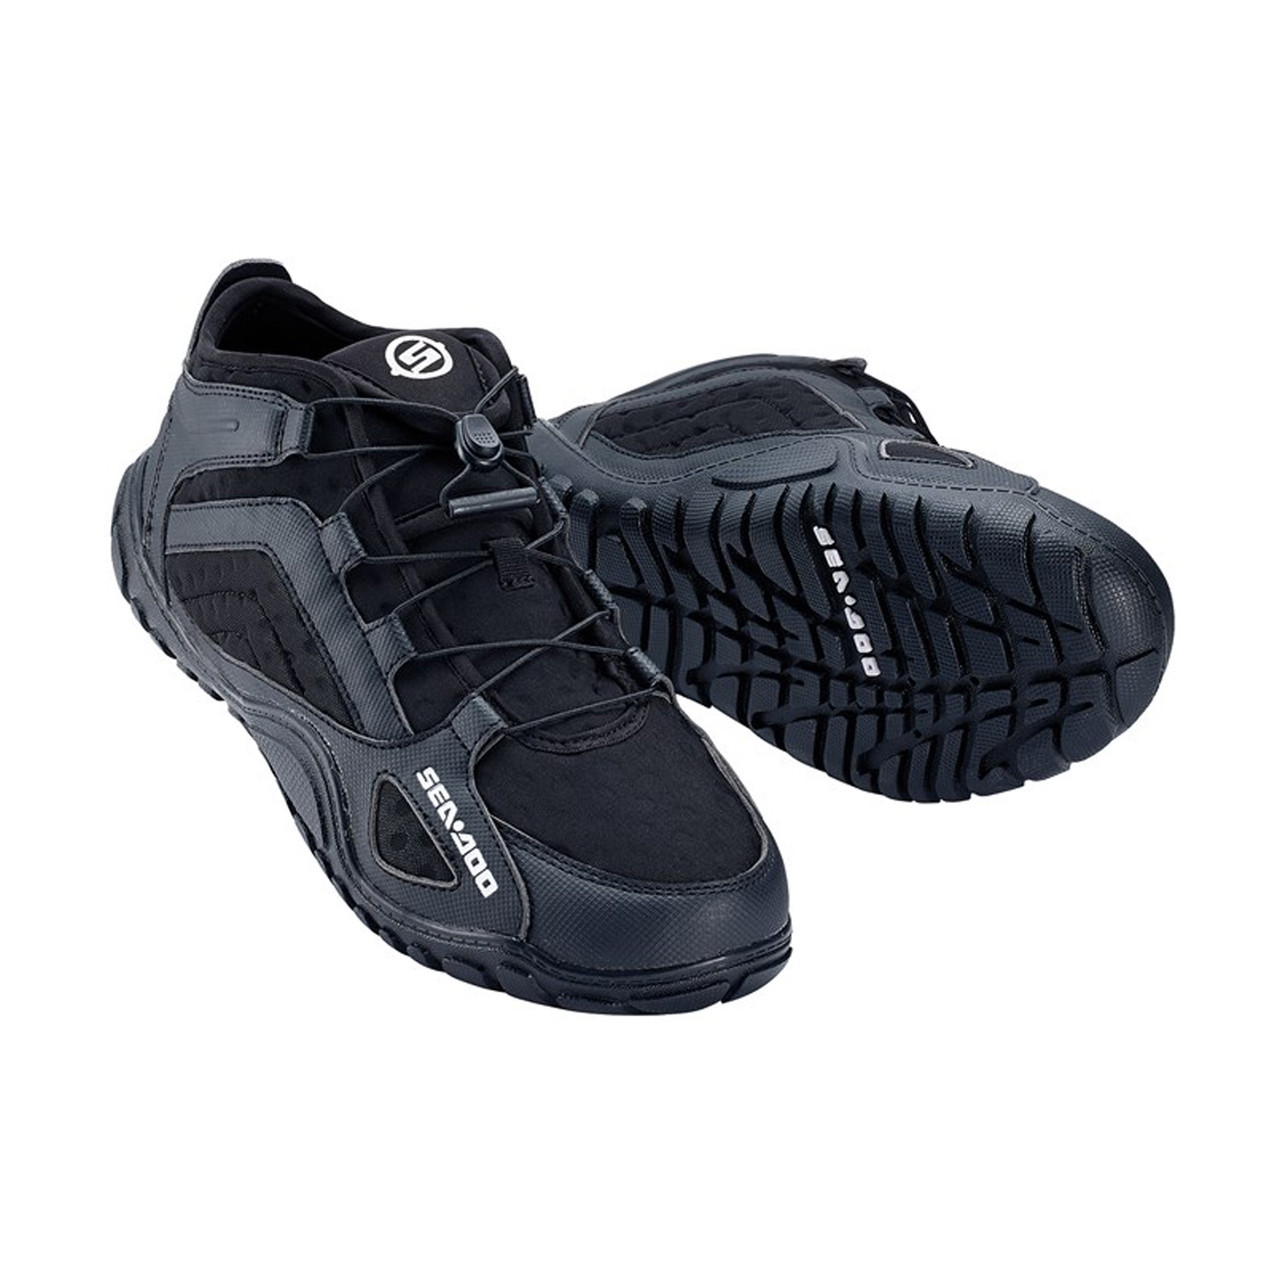 Sea-Doo New OEM Unisex Size 12, Low Cut Neoprene Riding Shoes, 4442283290